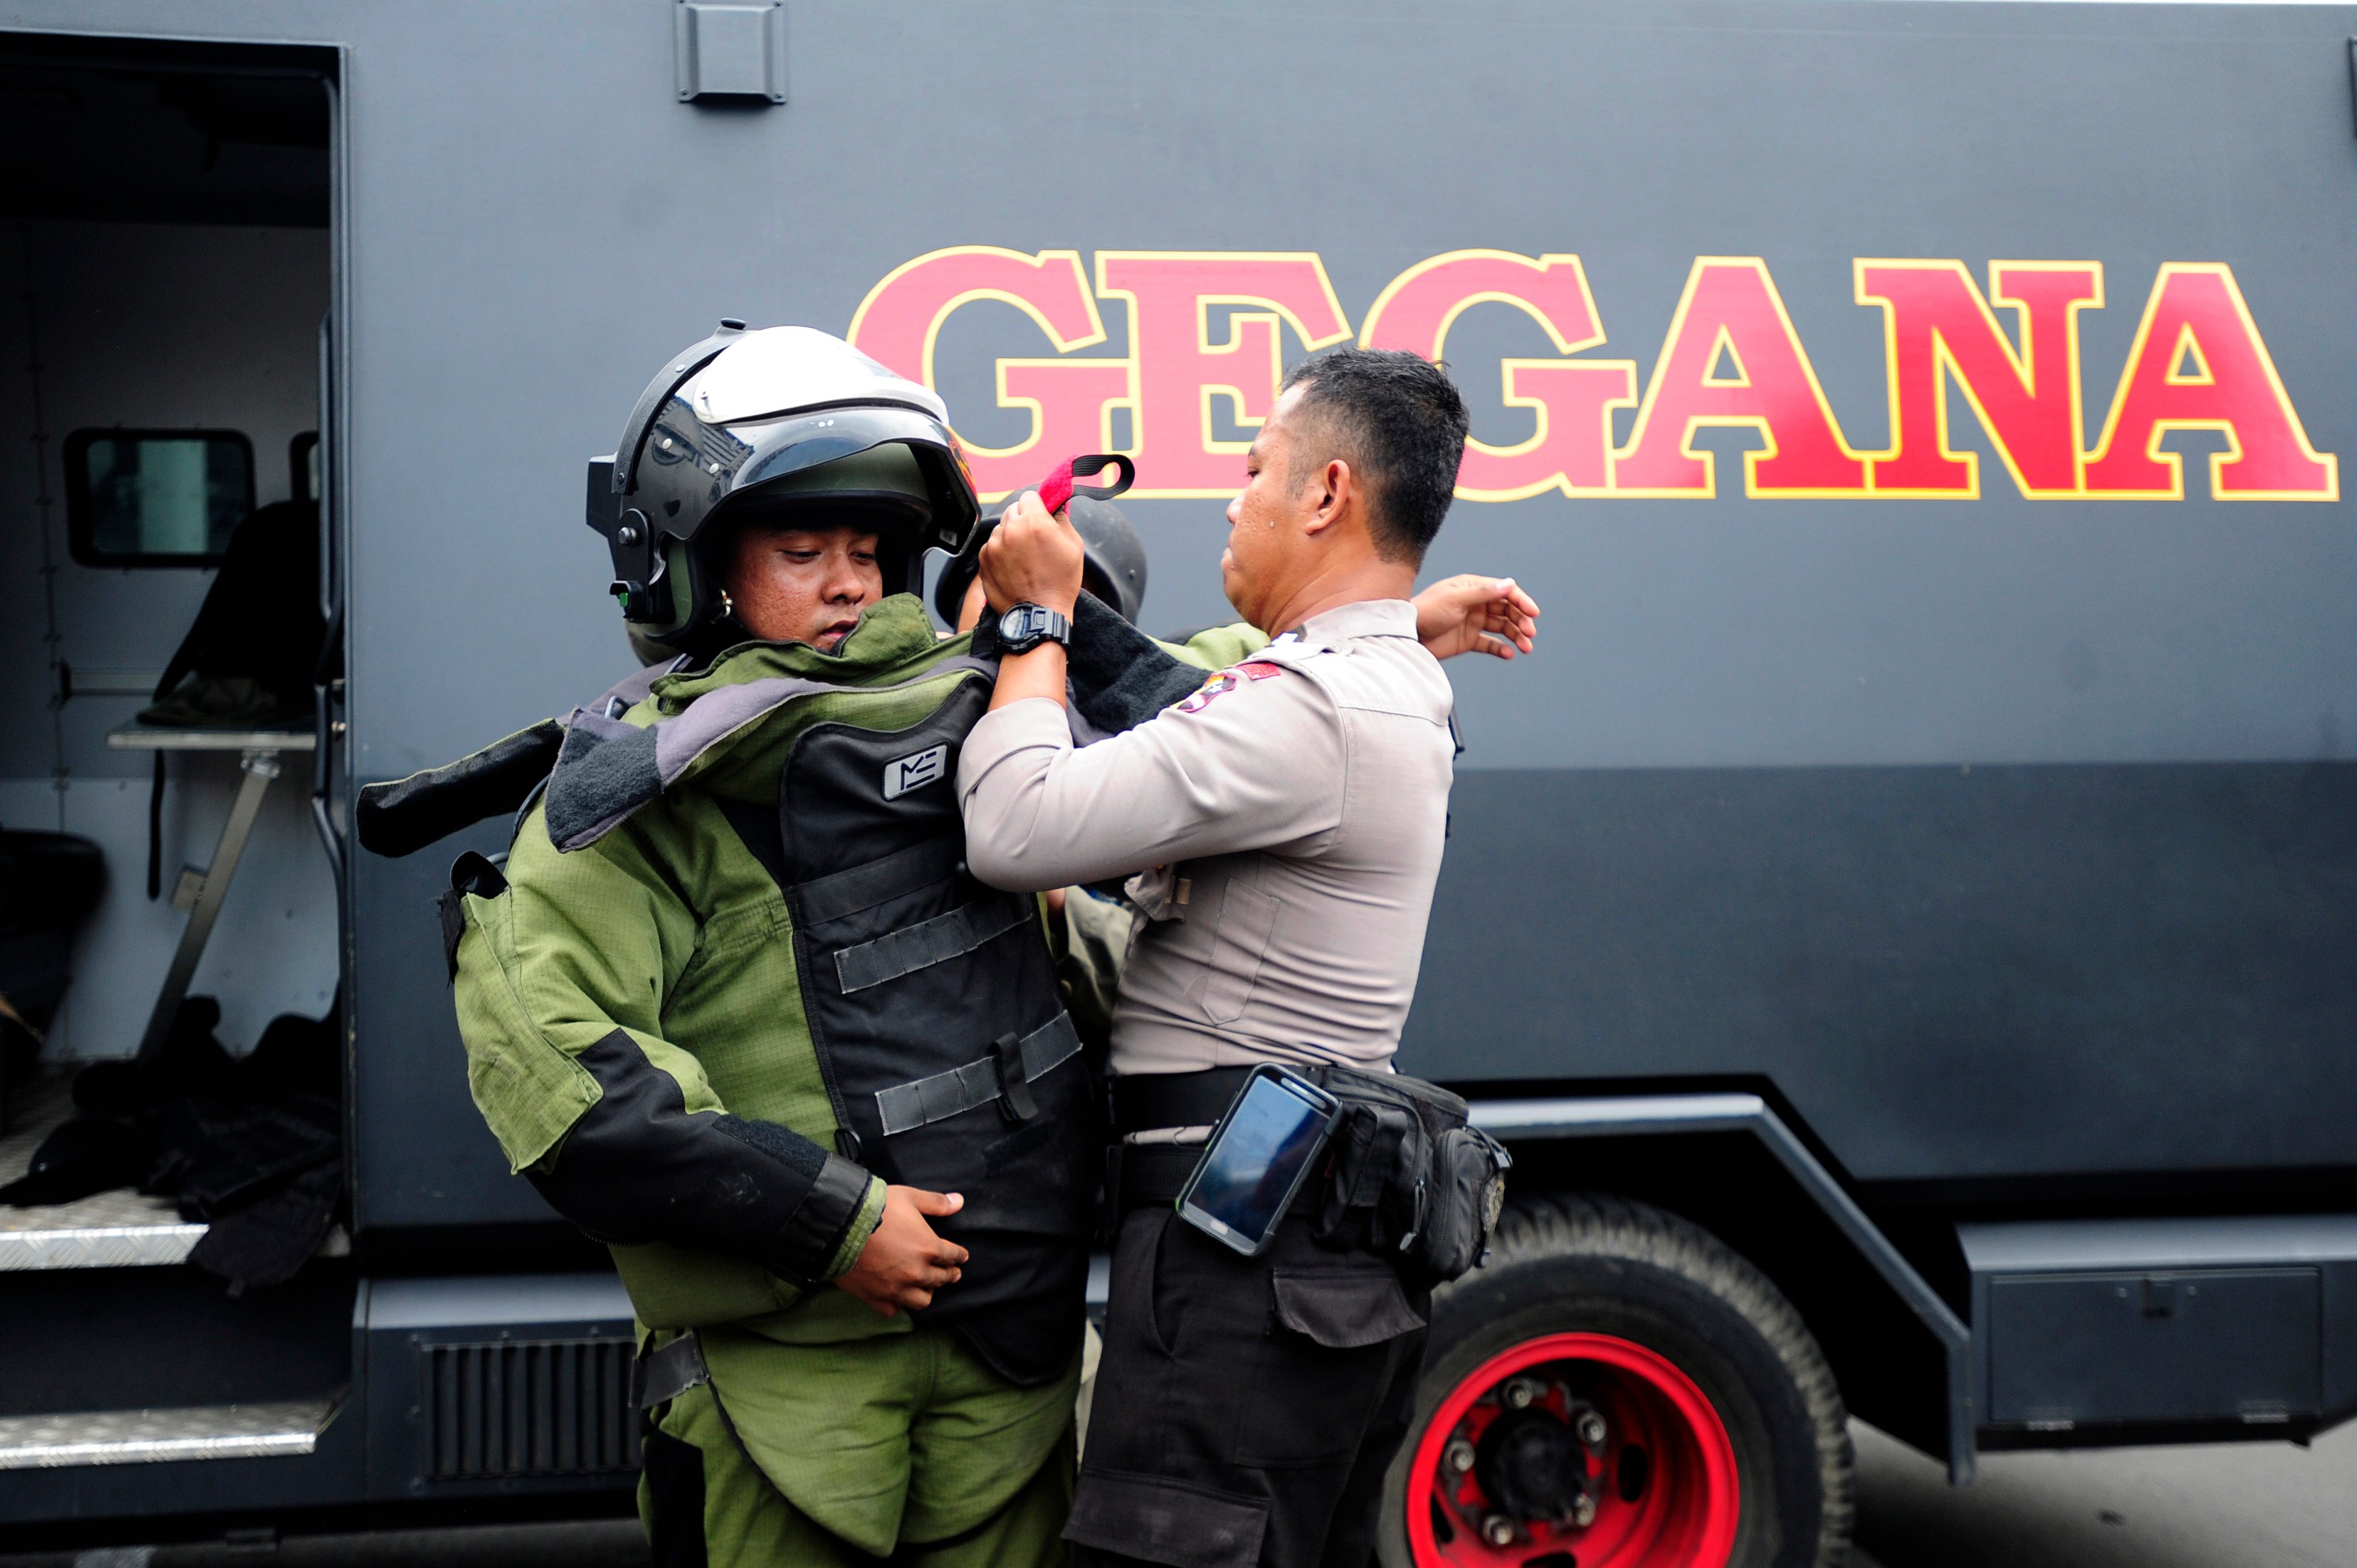 TIM GEGANA. Petugas Gegana Polda Metro Jaya bersiap untuk mengamankan plastik yang mencurigakan di lokasi ledakan Pos Polisi Sarinah, Jakarta, pada 14 Januari 2016. Foto oleh Wahyu Putro A/Antara  